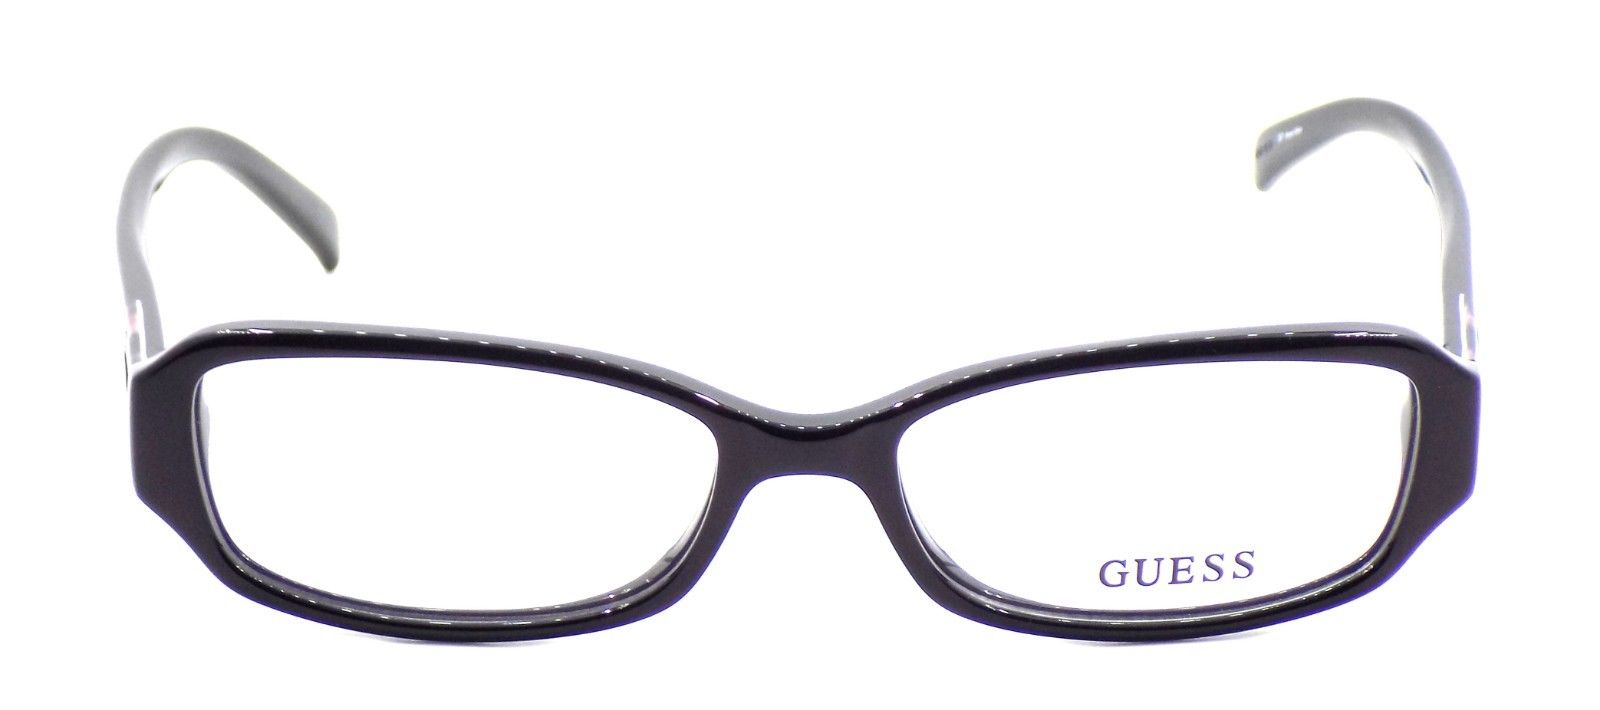 2-GUESS GU2366 BLK Women's Eyeglasses Frames 53-16-135 Black & Crystals + CASE-715583700420-IKSpecs